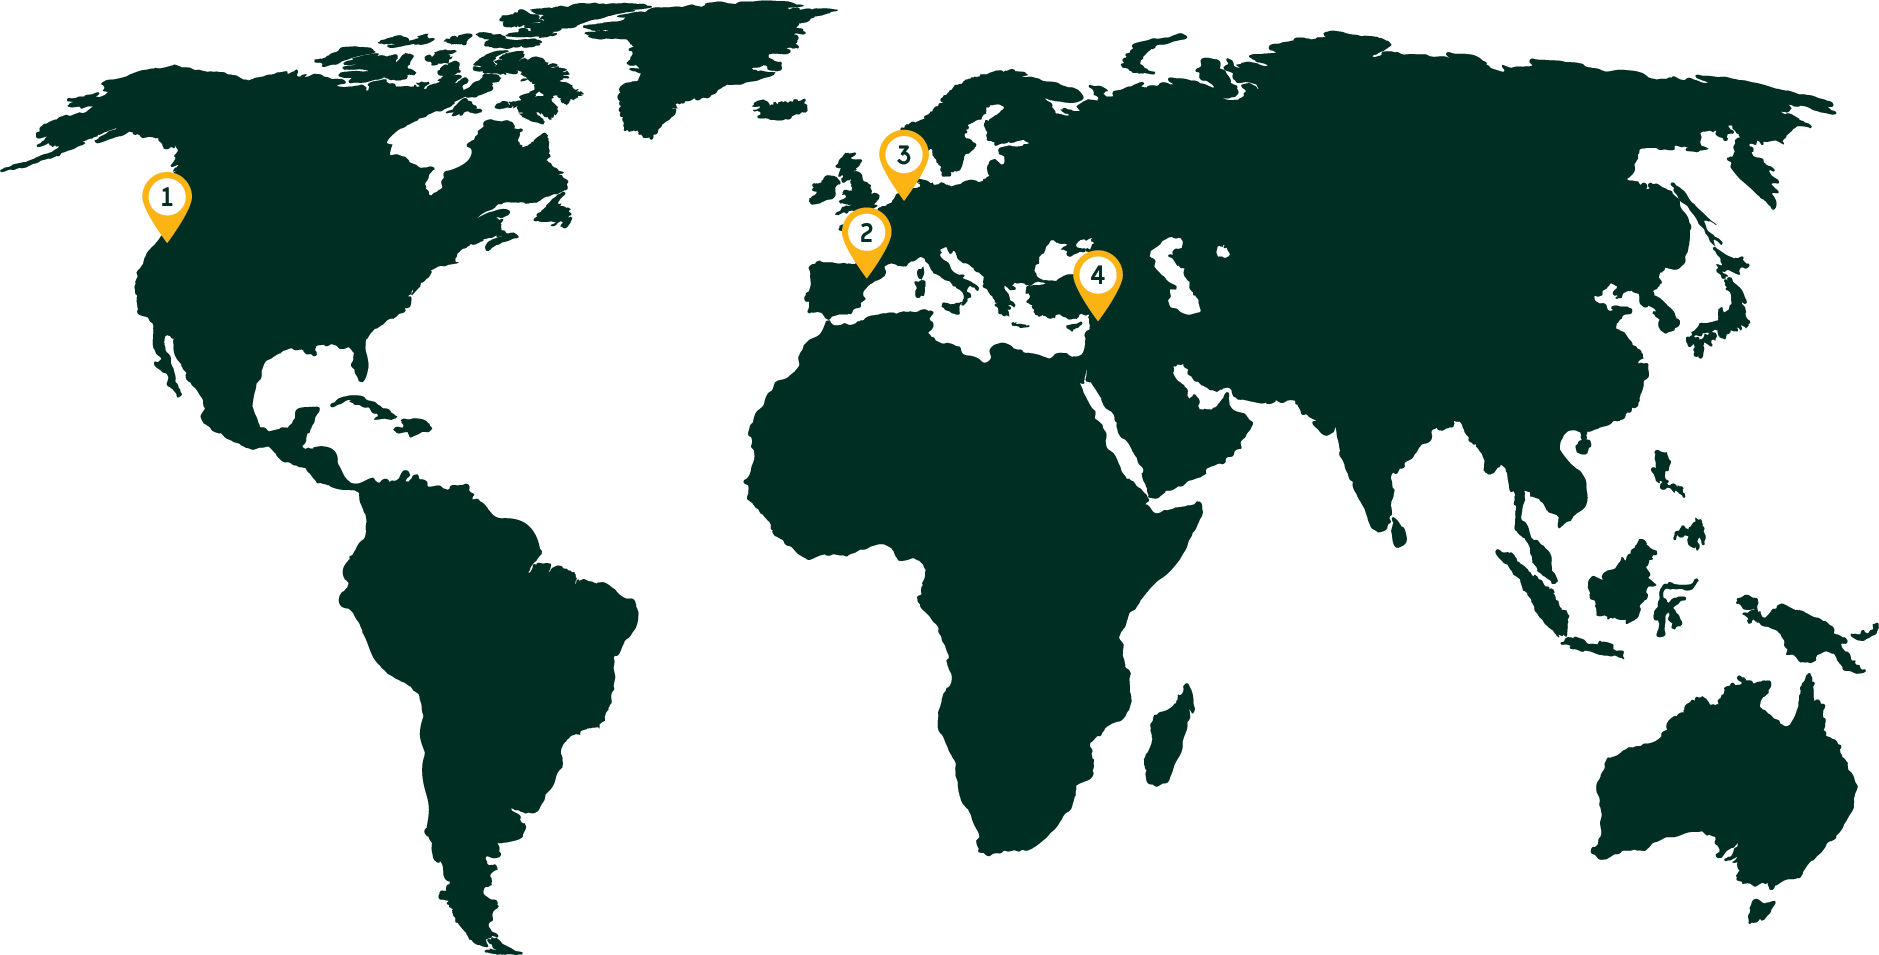 F1 SeedTech: Locations